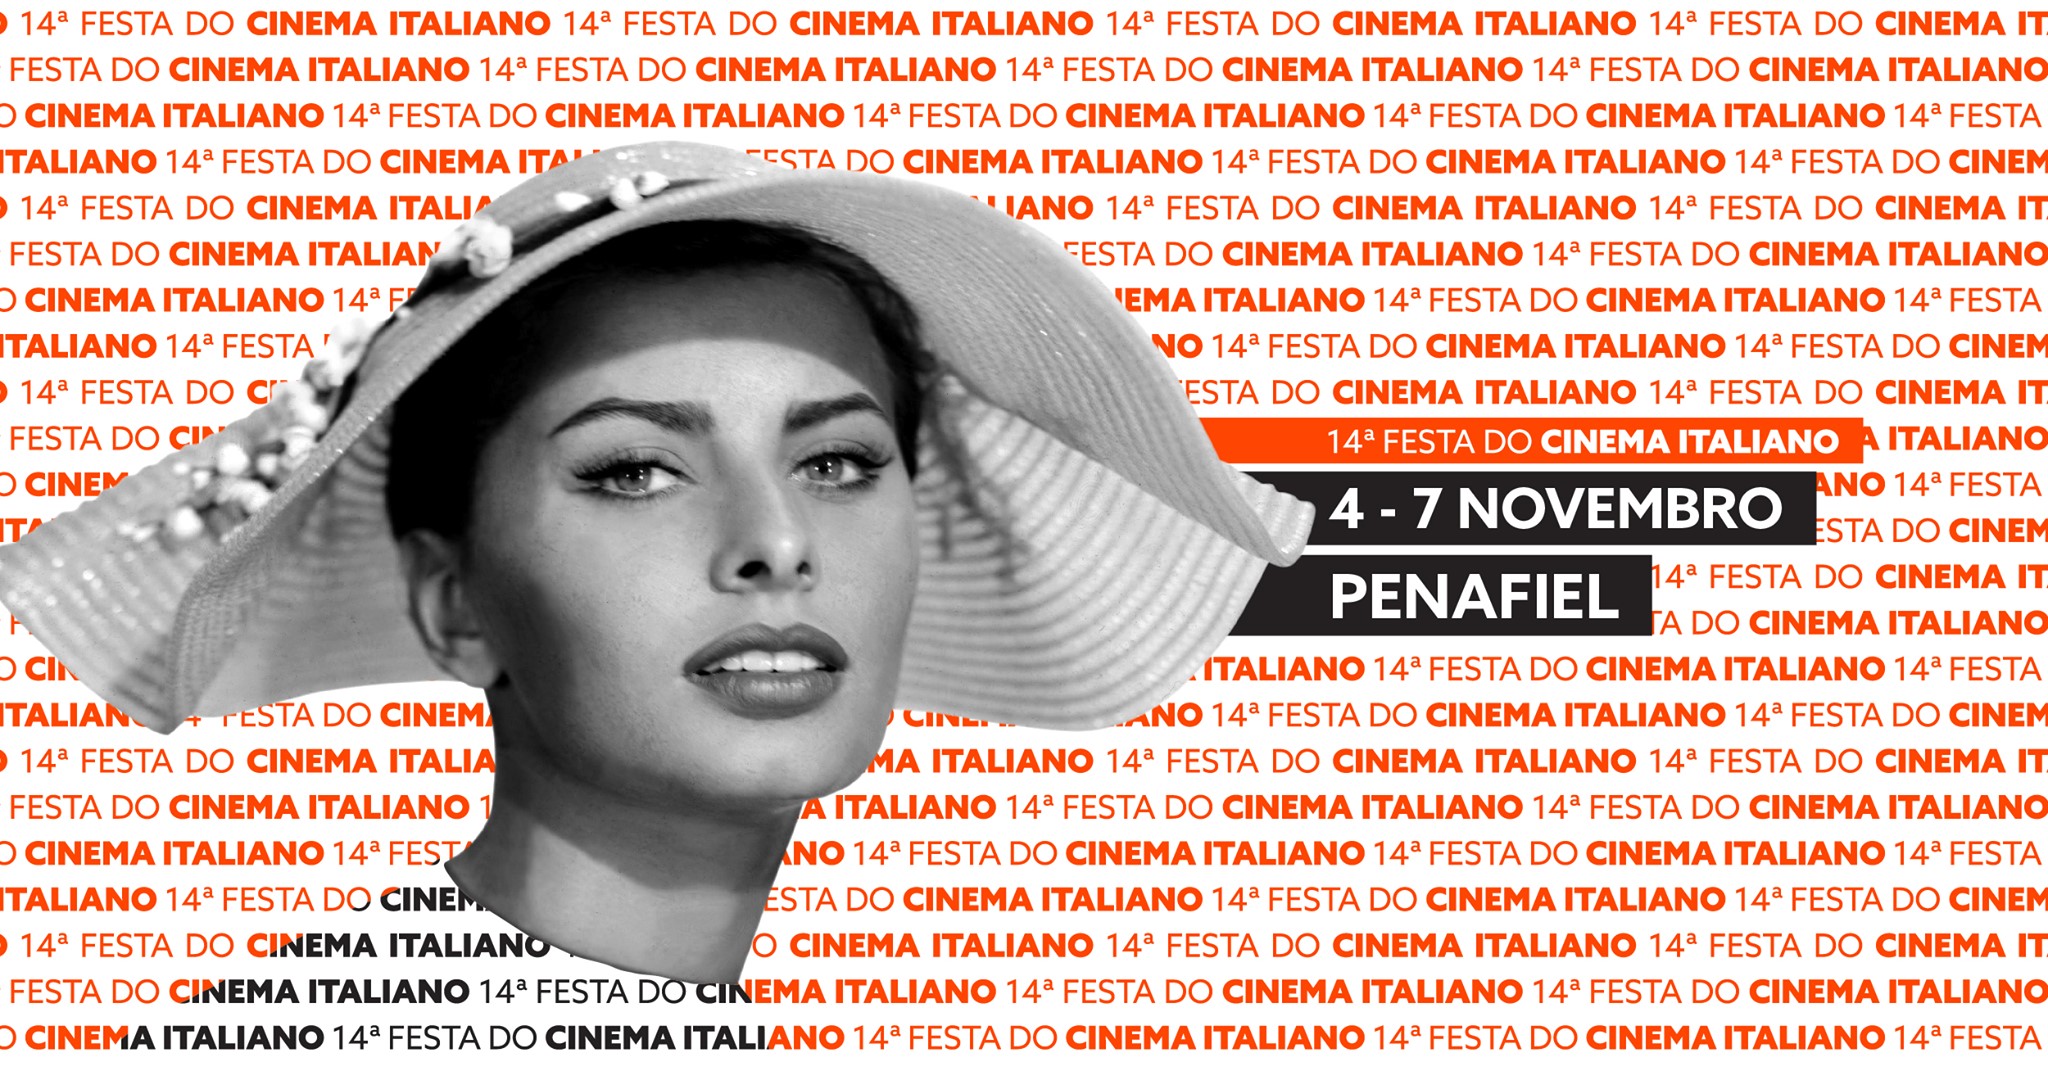 14ª Festa do Cinema Italiano | Penafiel